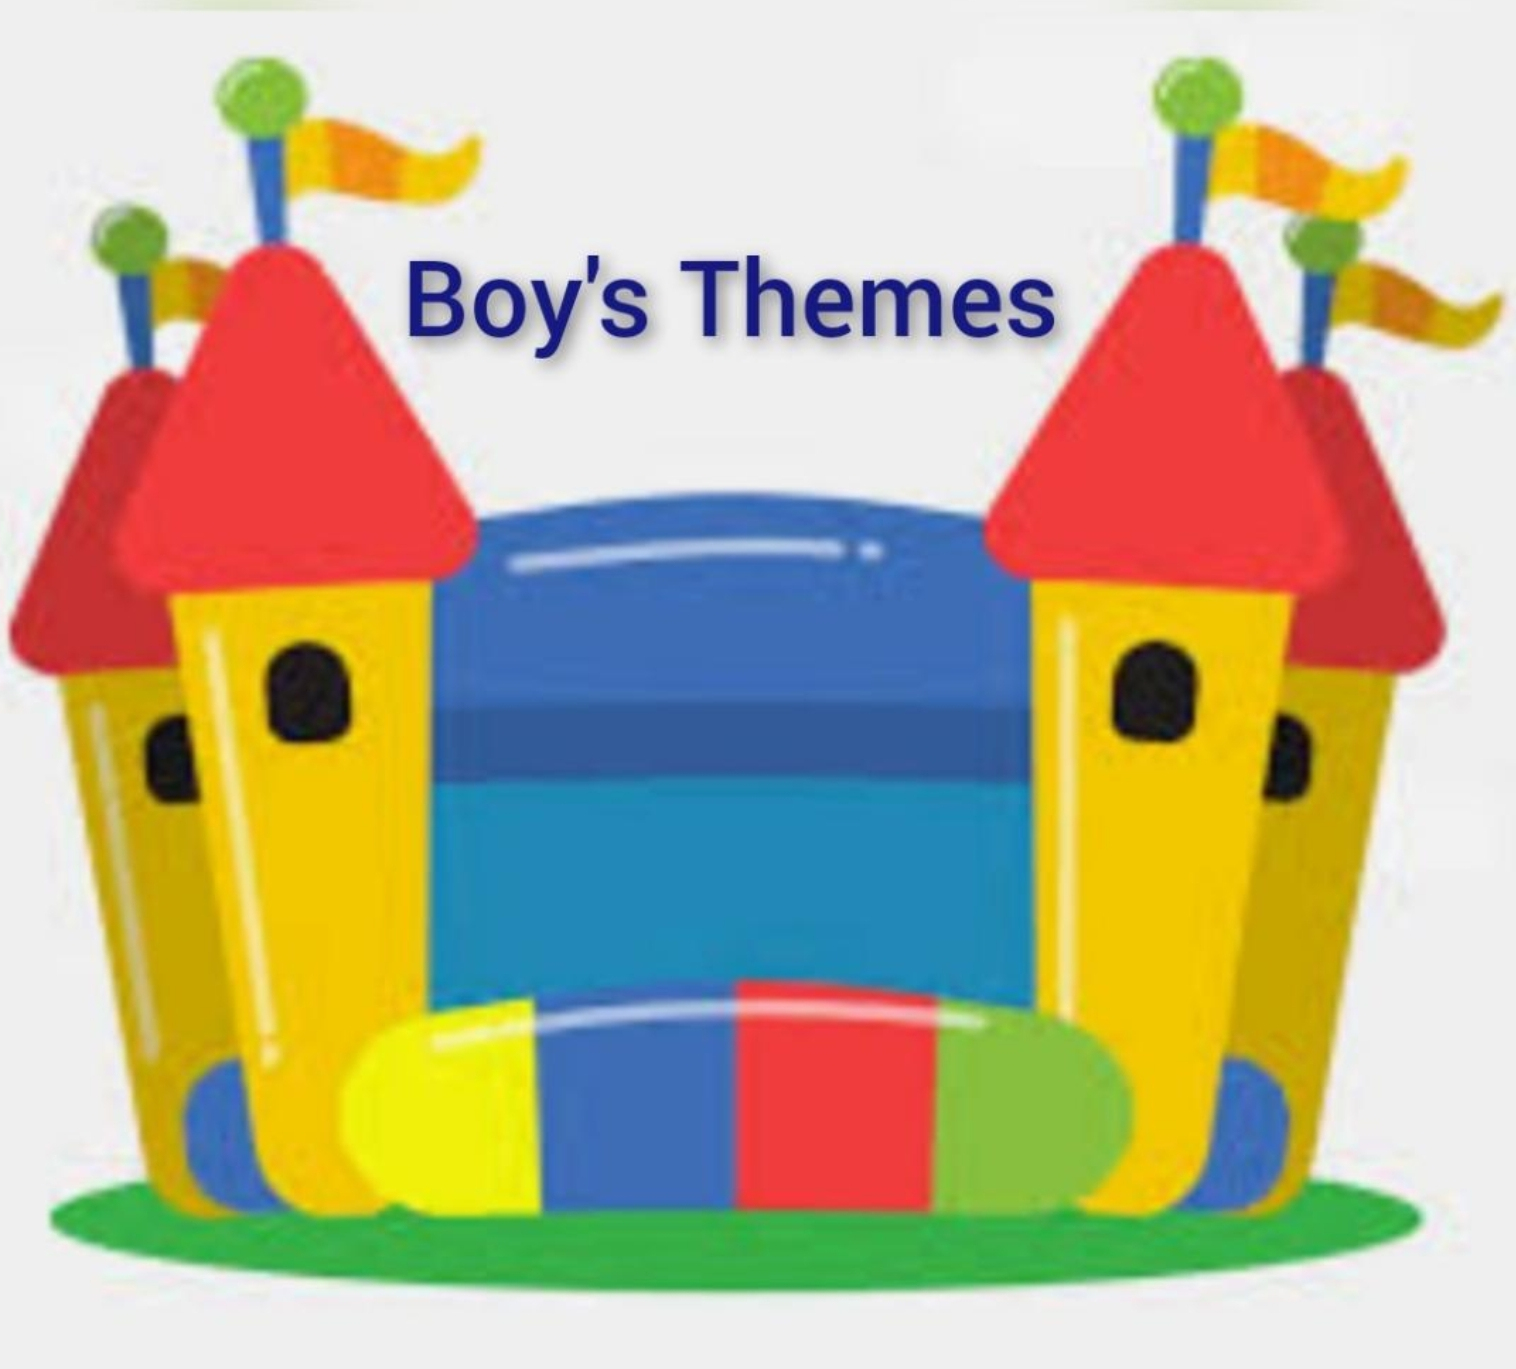 Boy’s Themes